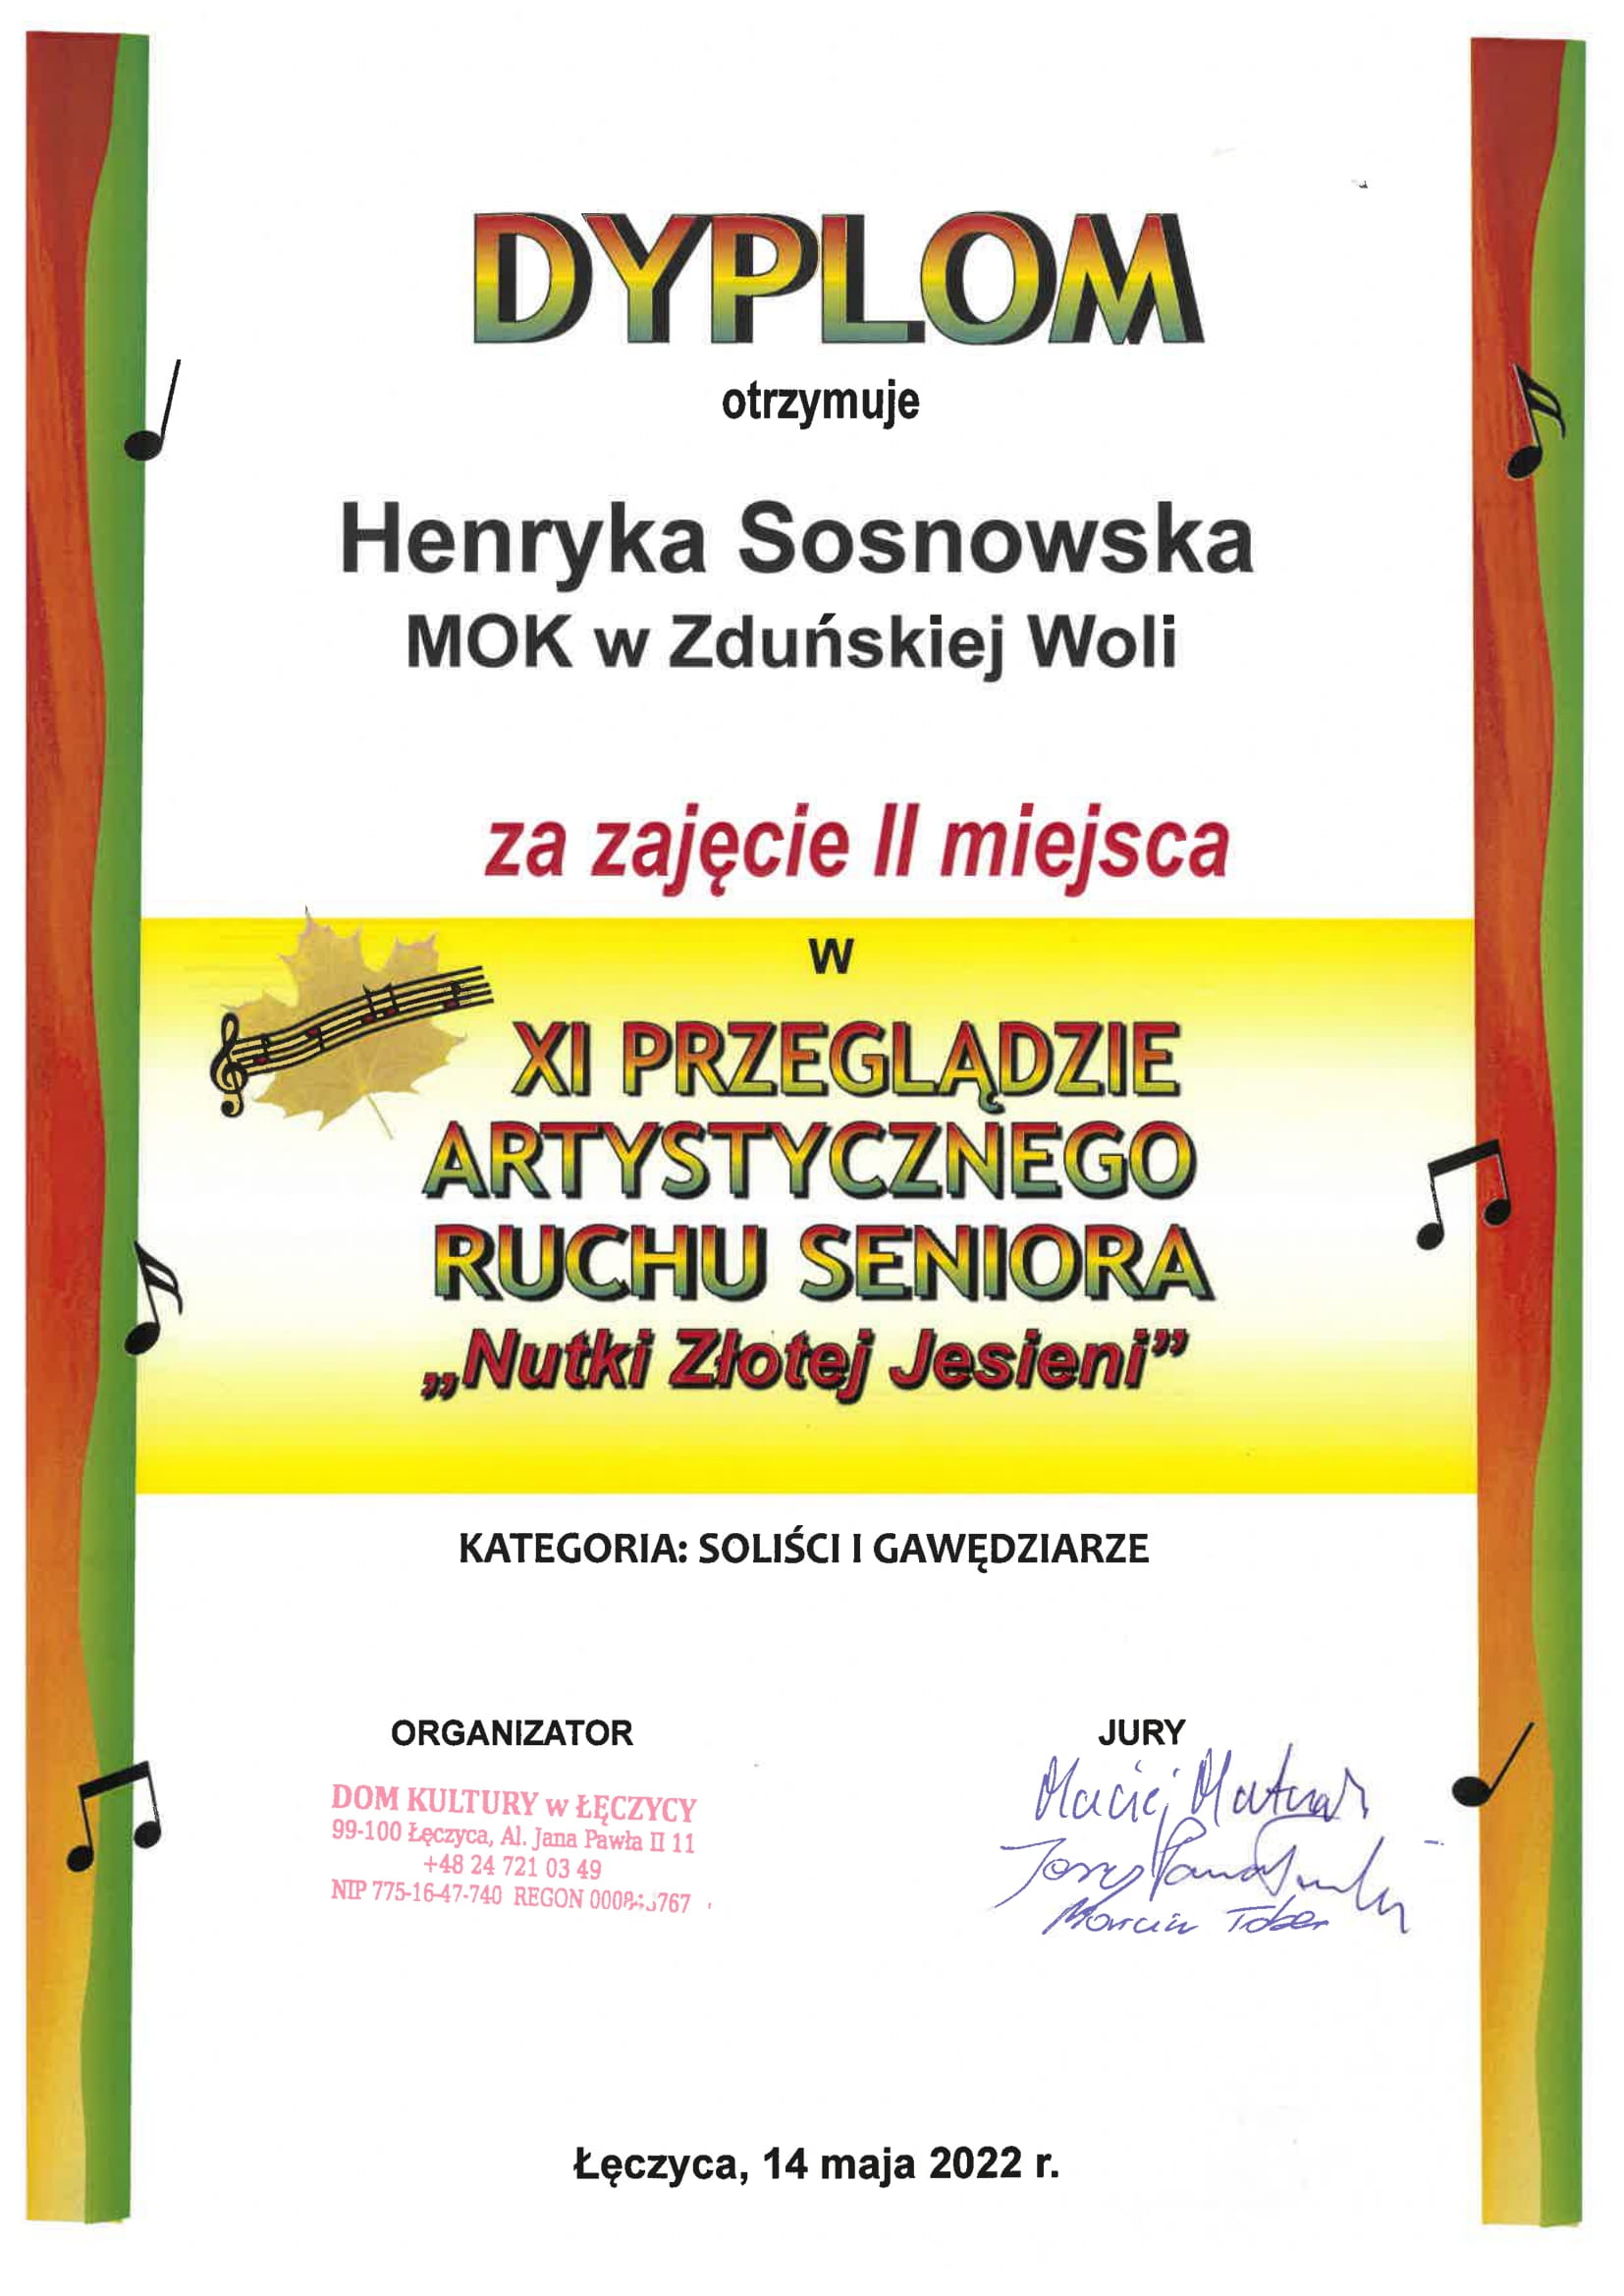 Solo II Miejsce Henryka Sosnowska 1